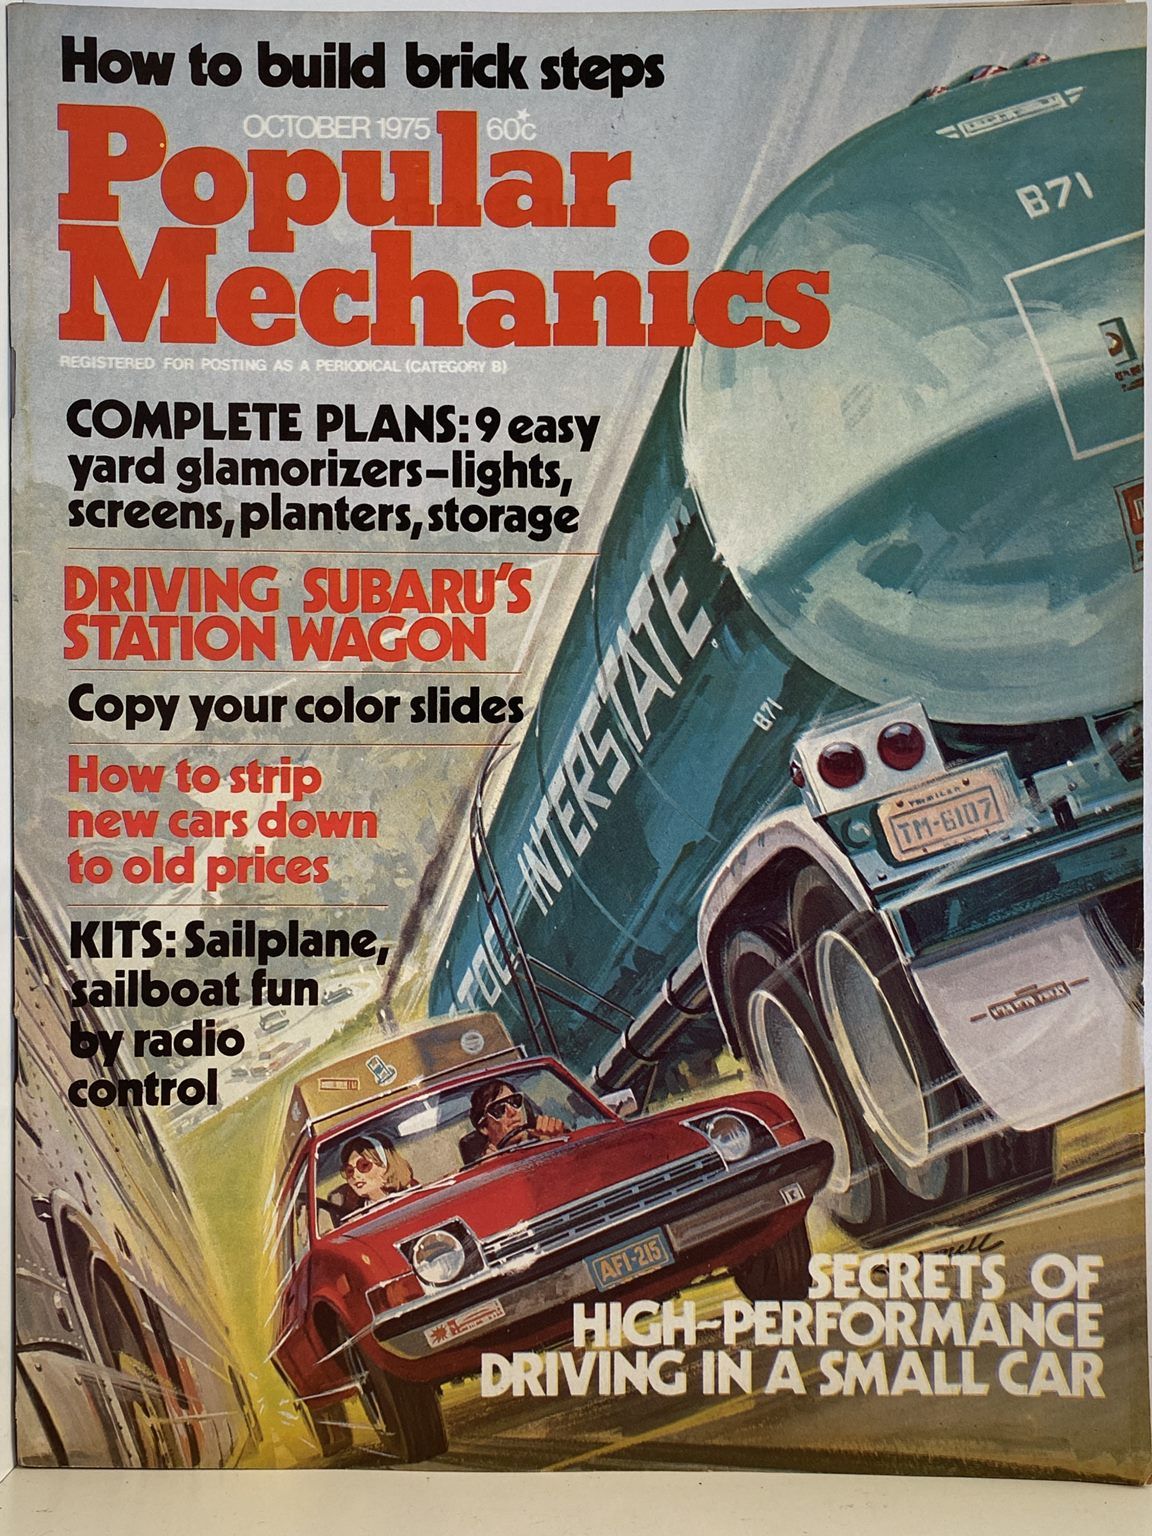 VINTAGE MAGAZINE: Popular Mechanics - Vol. 144, No. 2 - October 1975